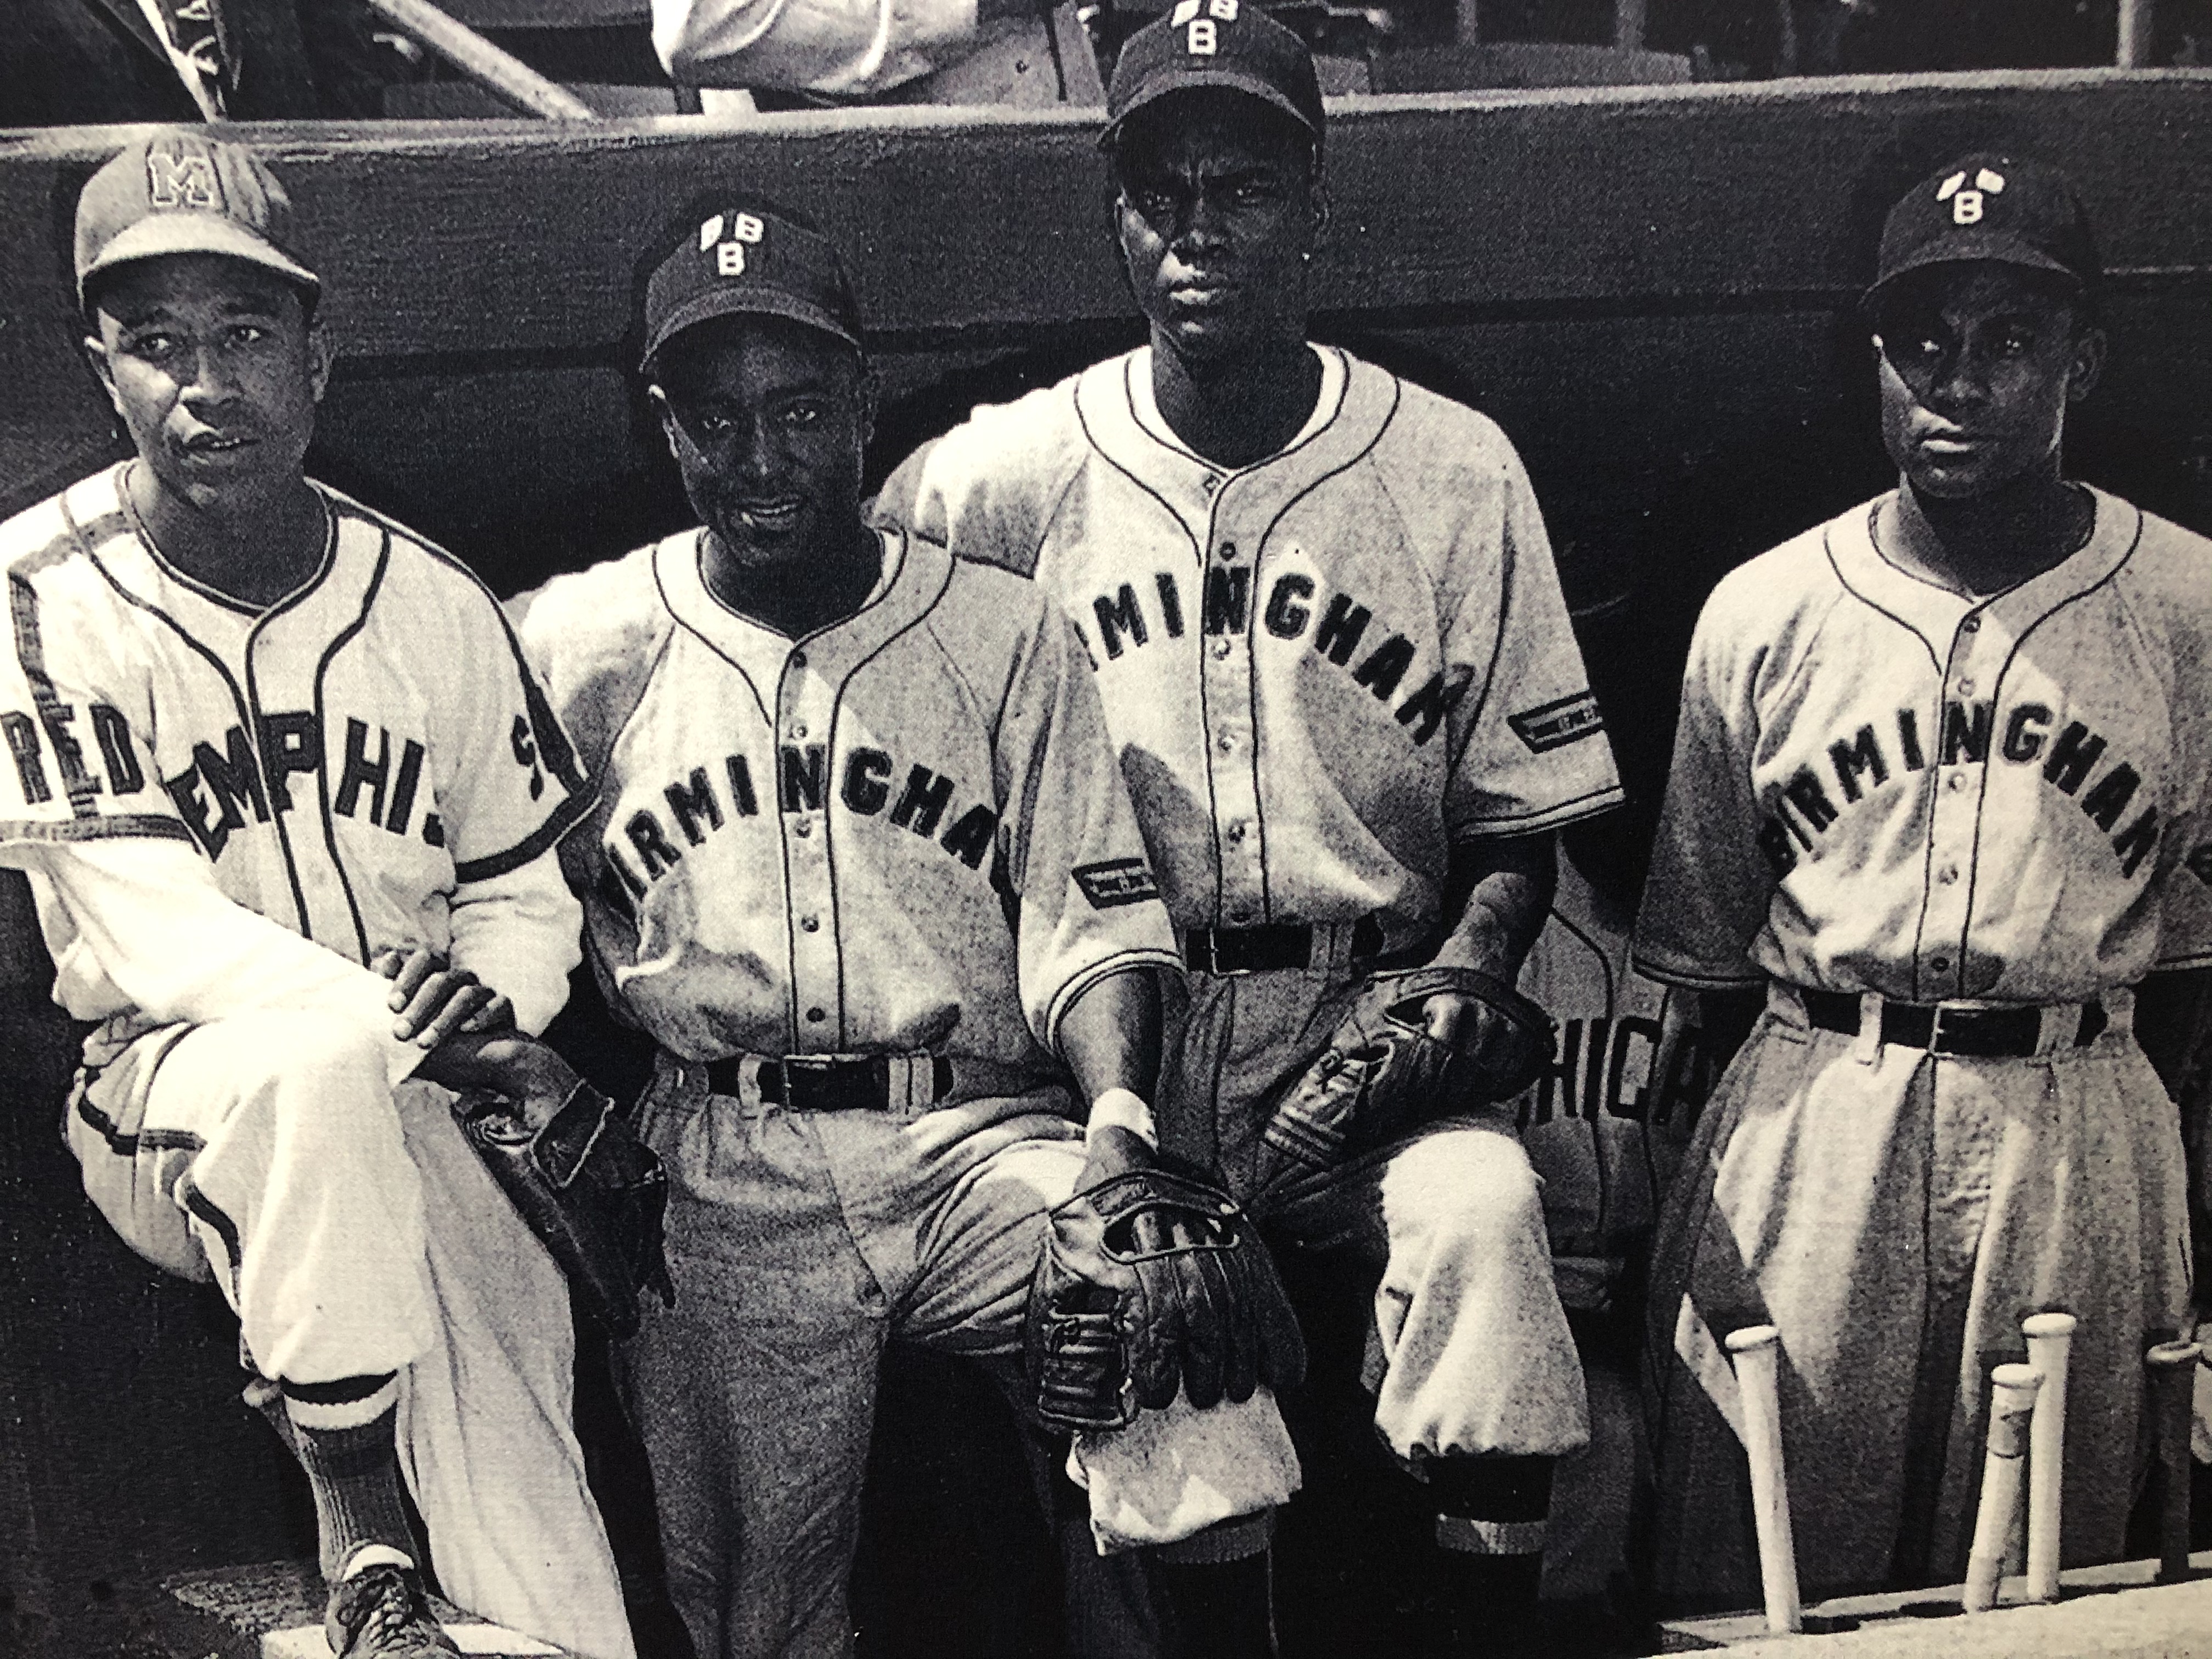 MLB Philadelphia Phillies Uniform Evolution Plaqued Poster 